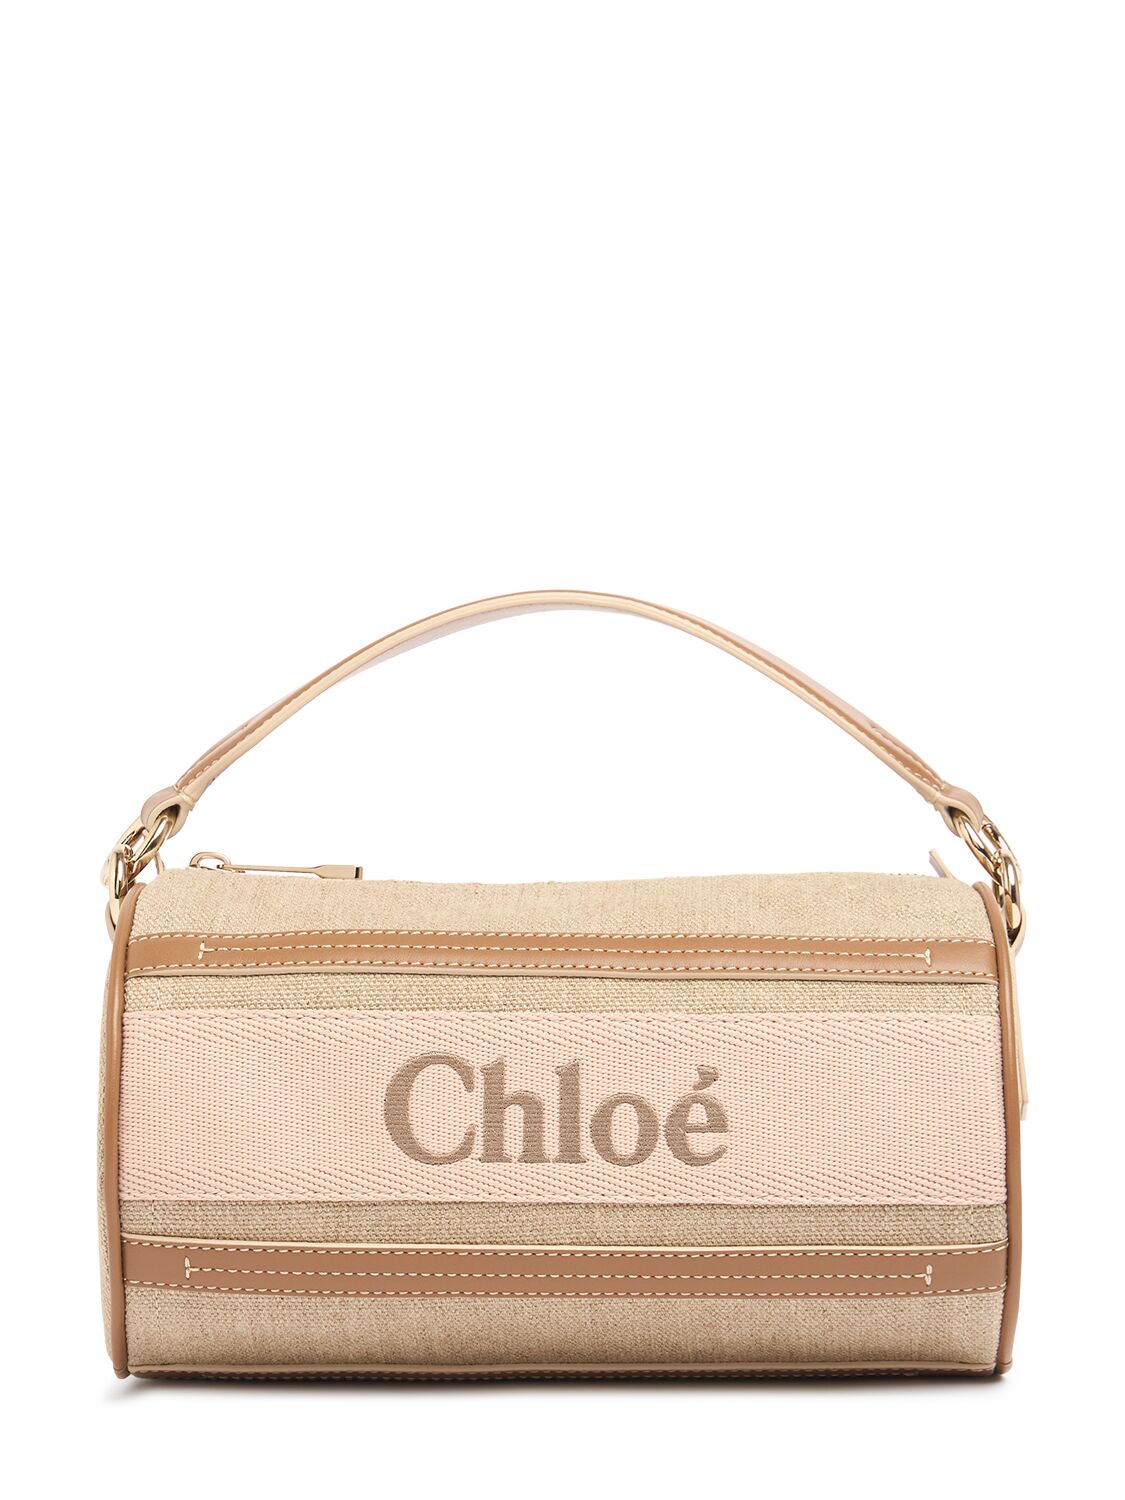 Chloé Woody Linen & Leather Shoulder Bag In Brown